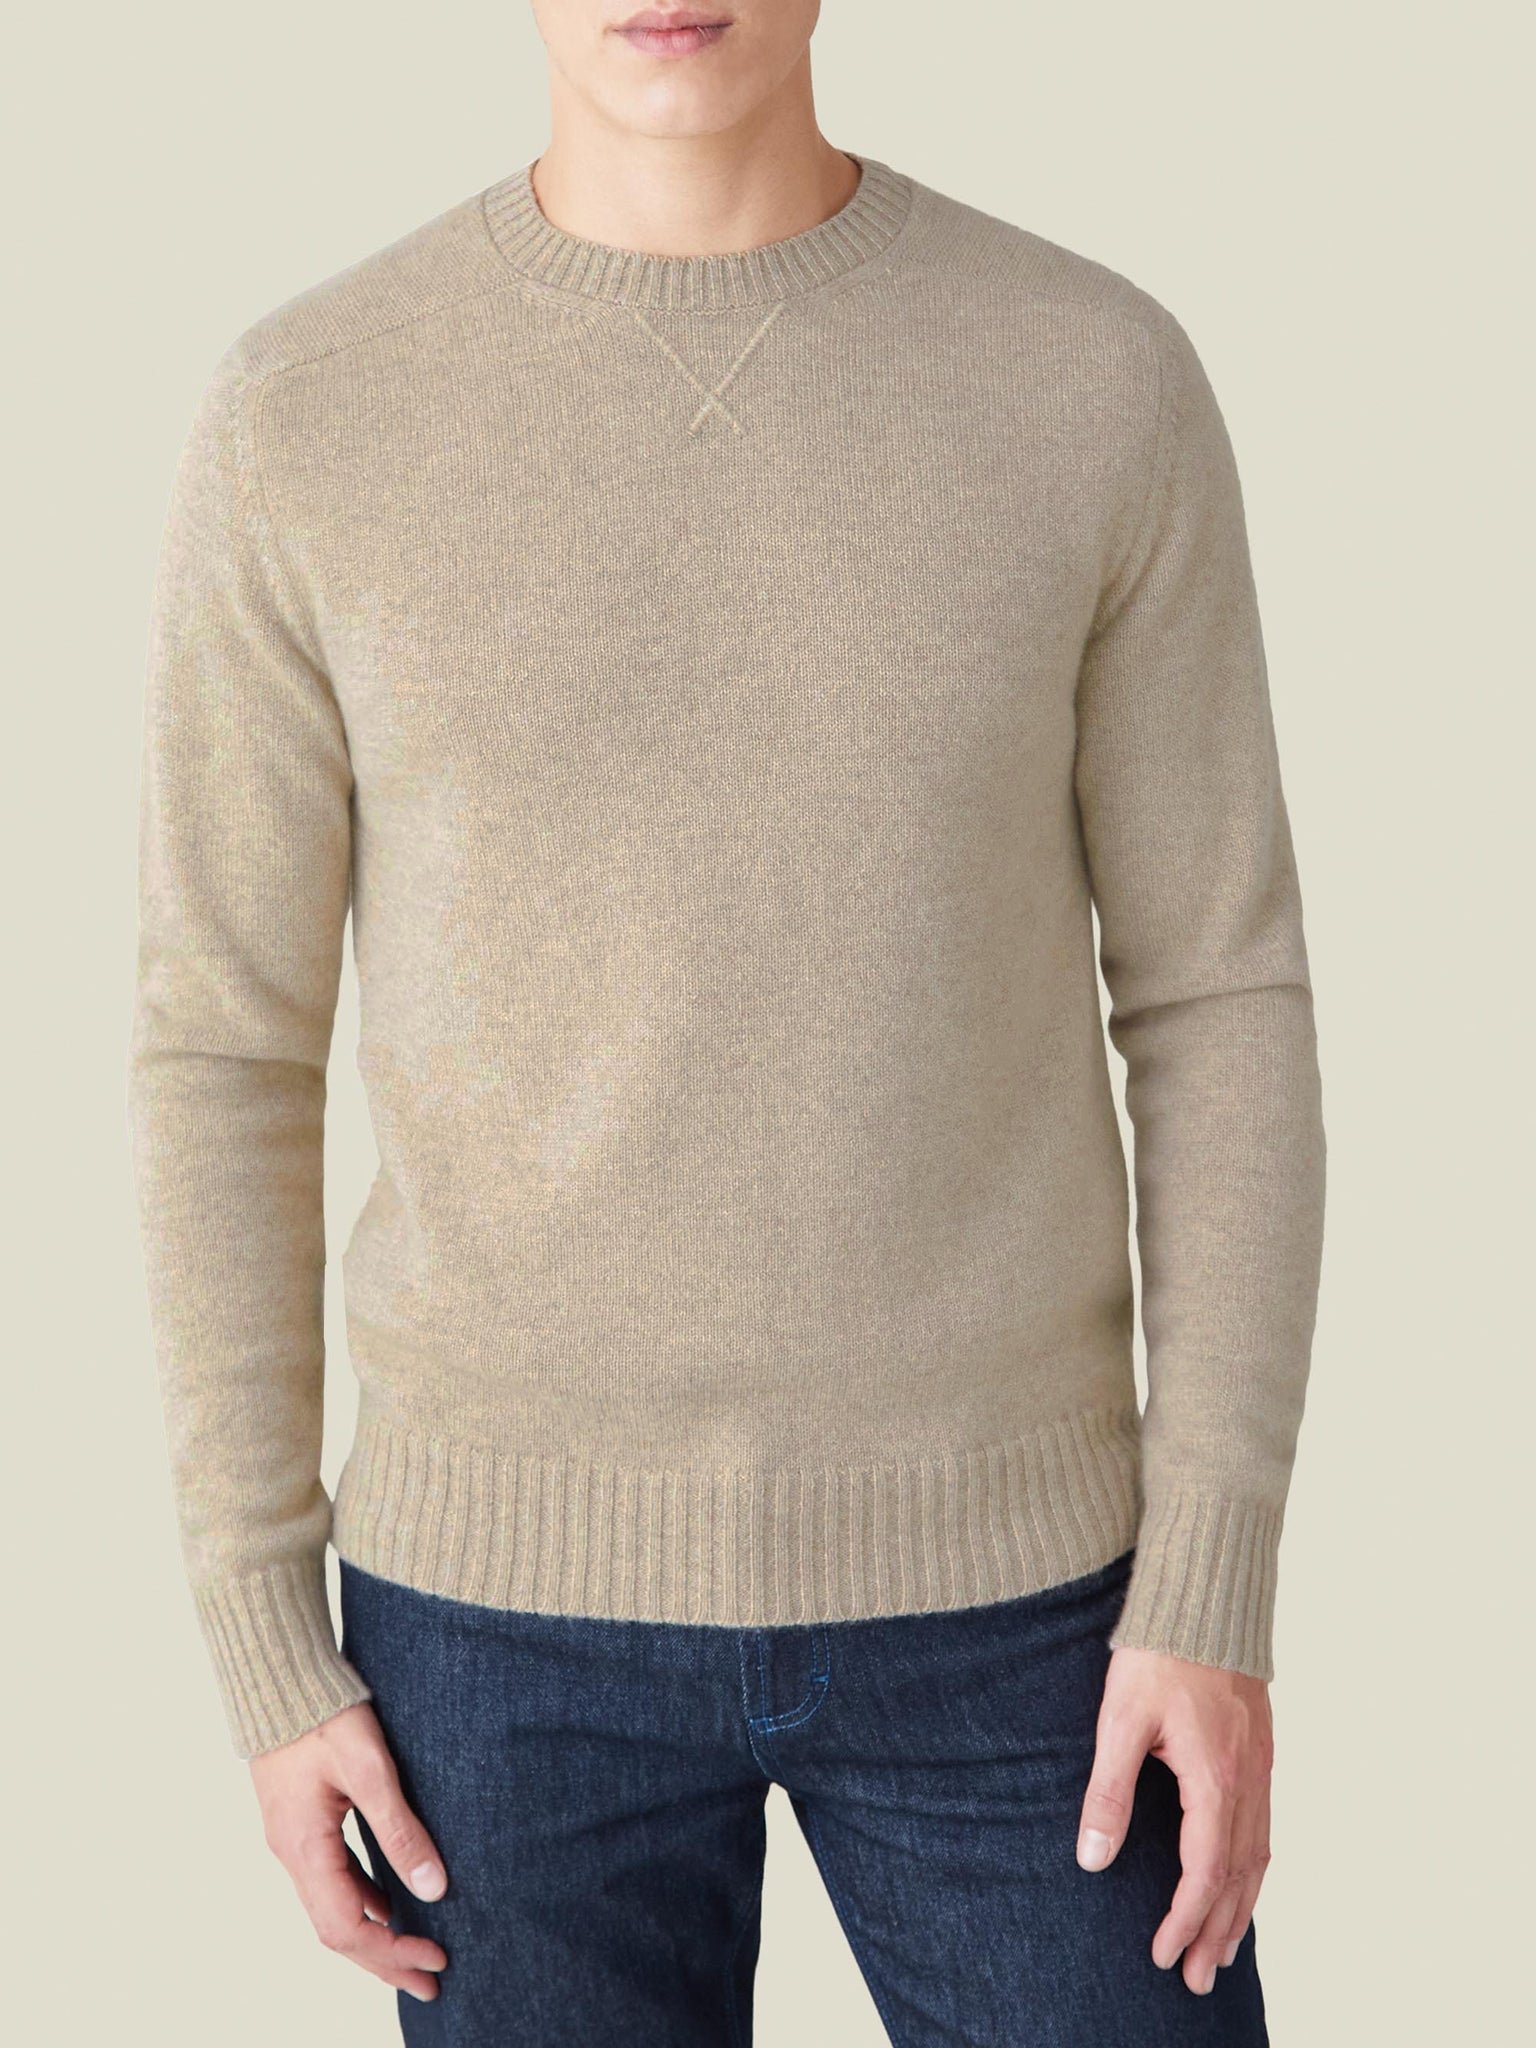 Luxurious knitwear - Luca Faloni cashmere crew neck - £340